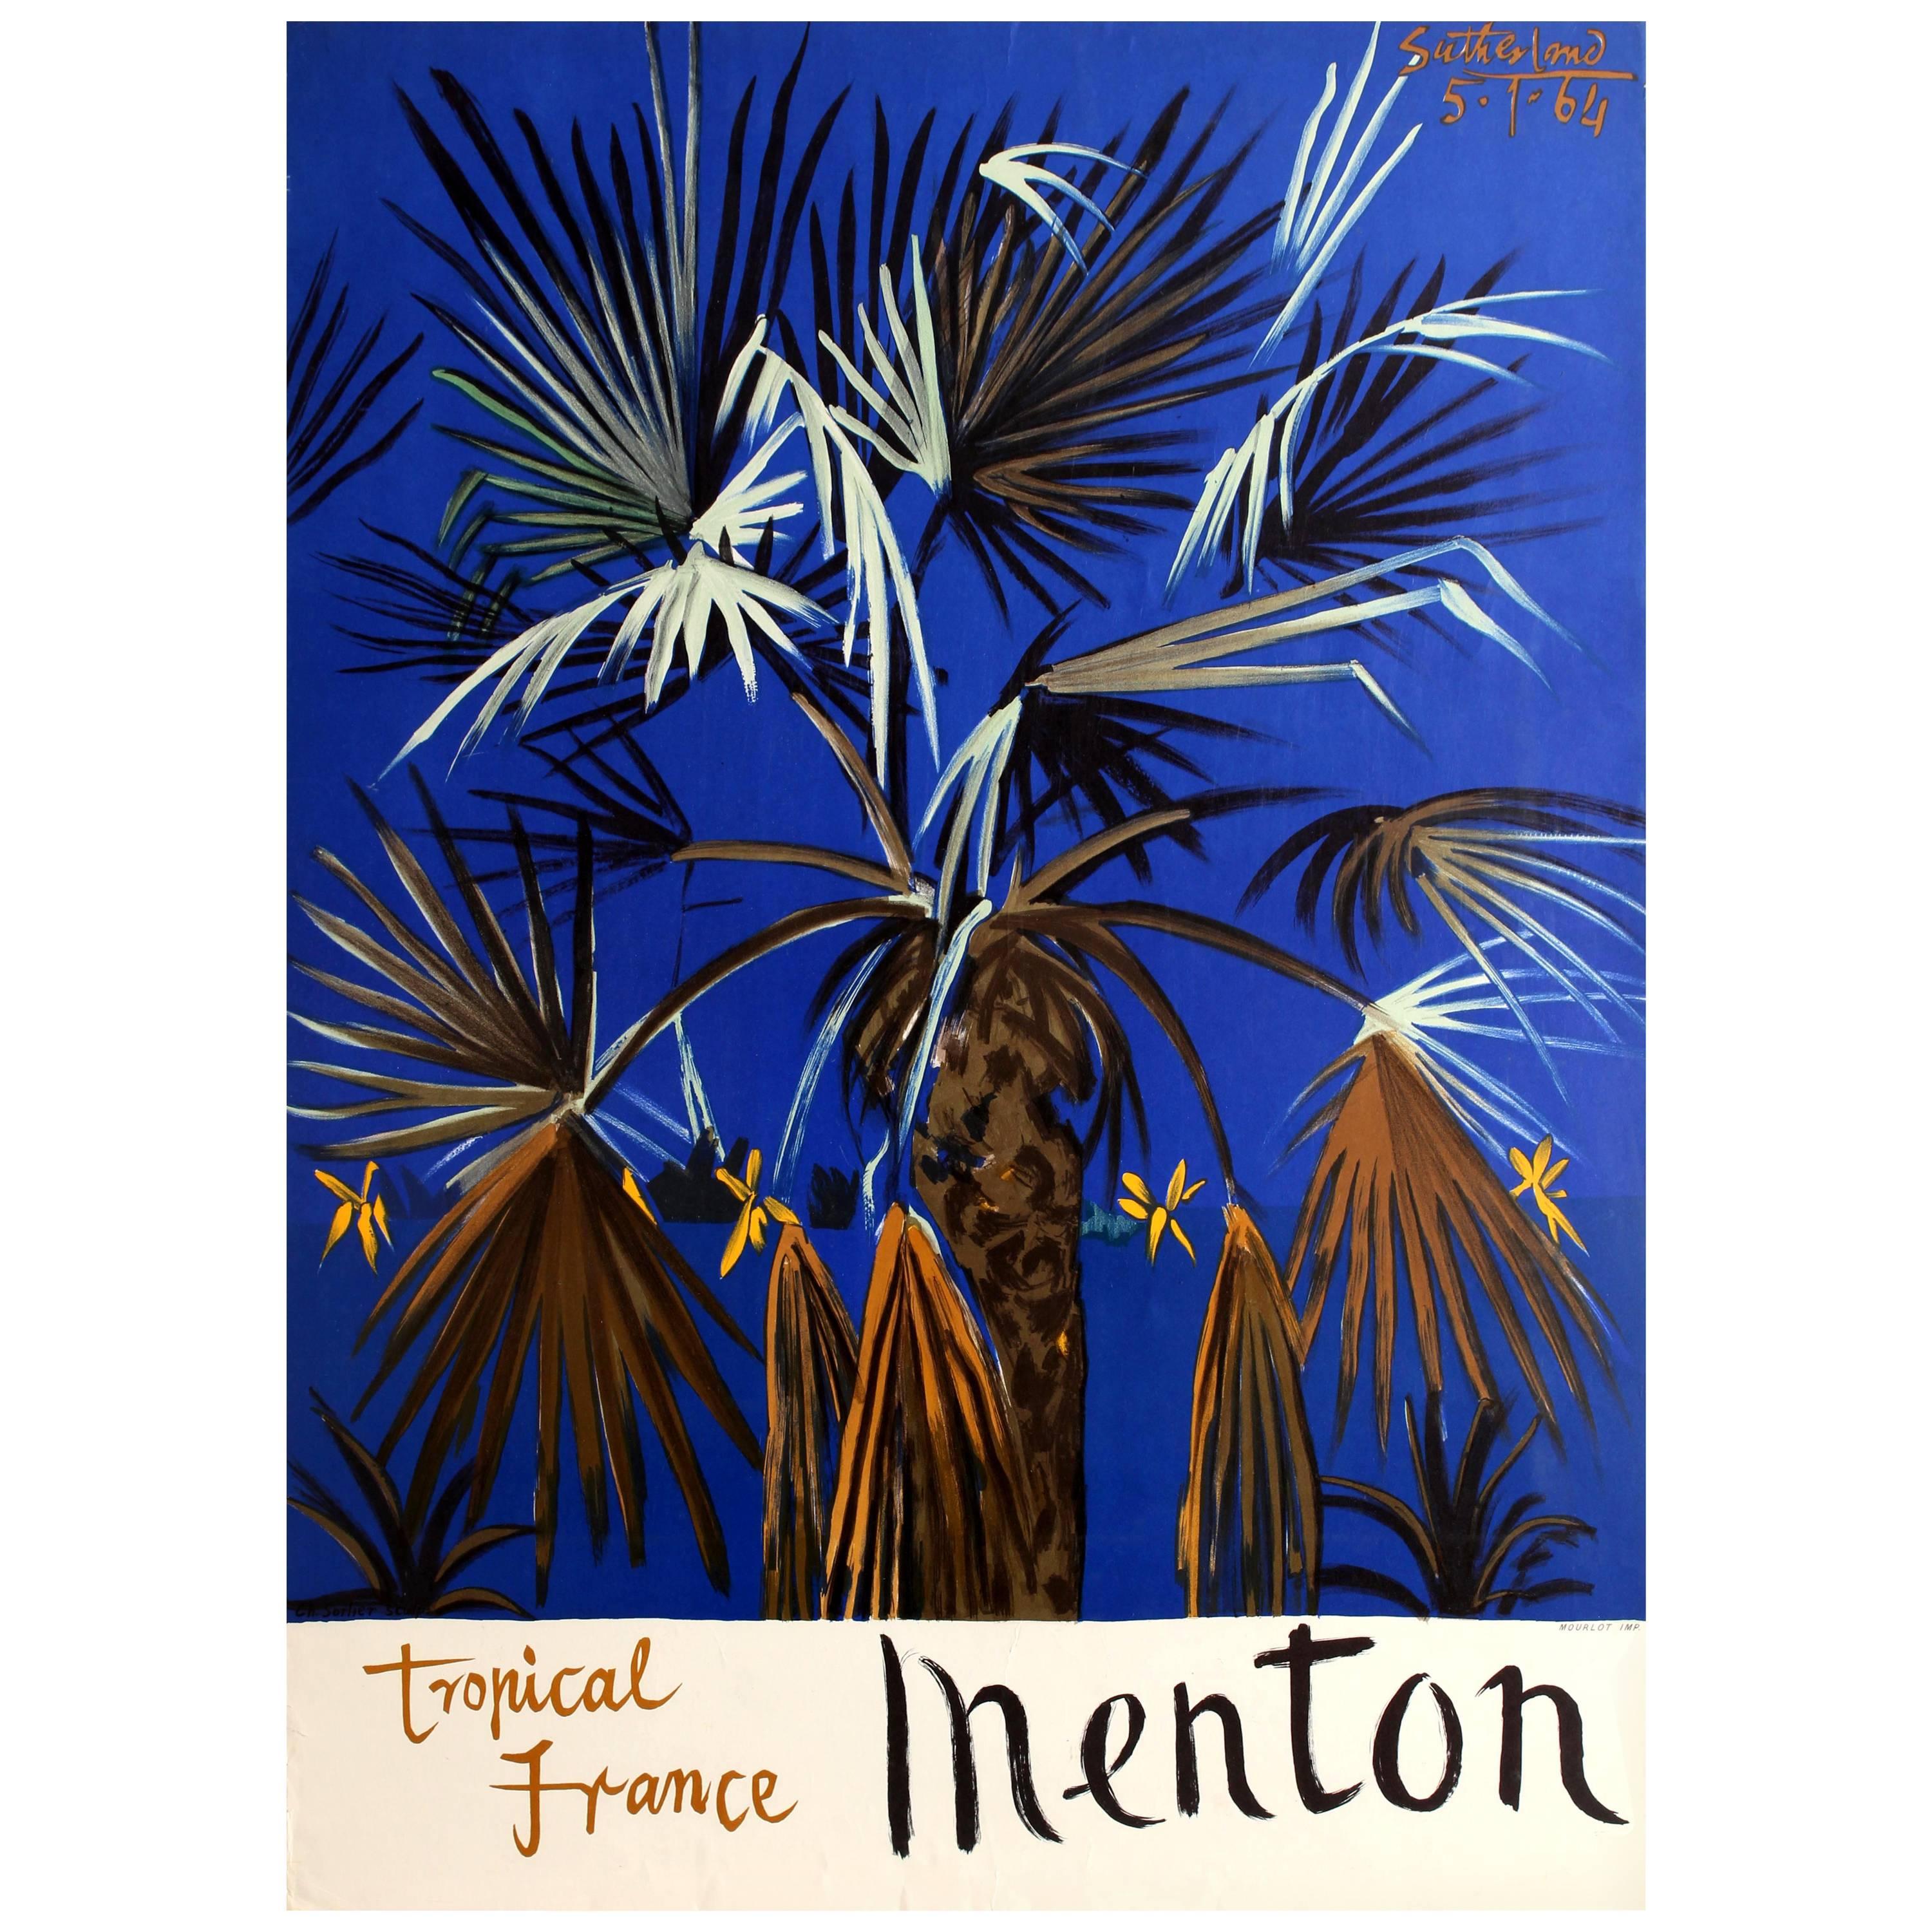 Original Vintage French Riviera Travel Poster Advertising Menton Tropical France